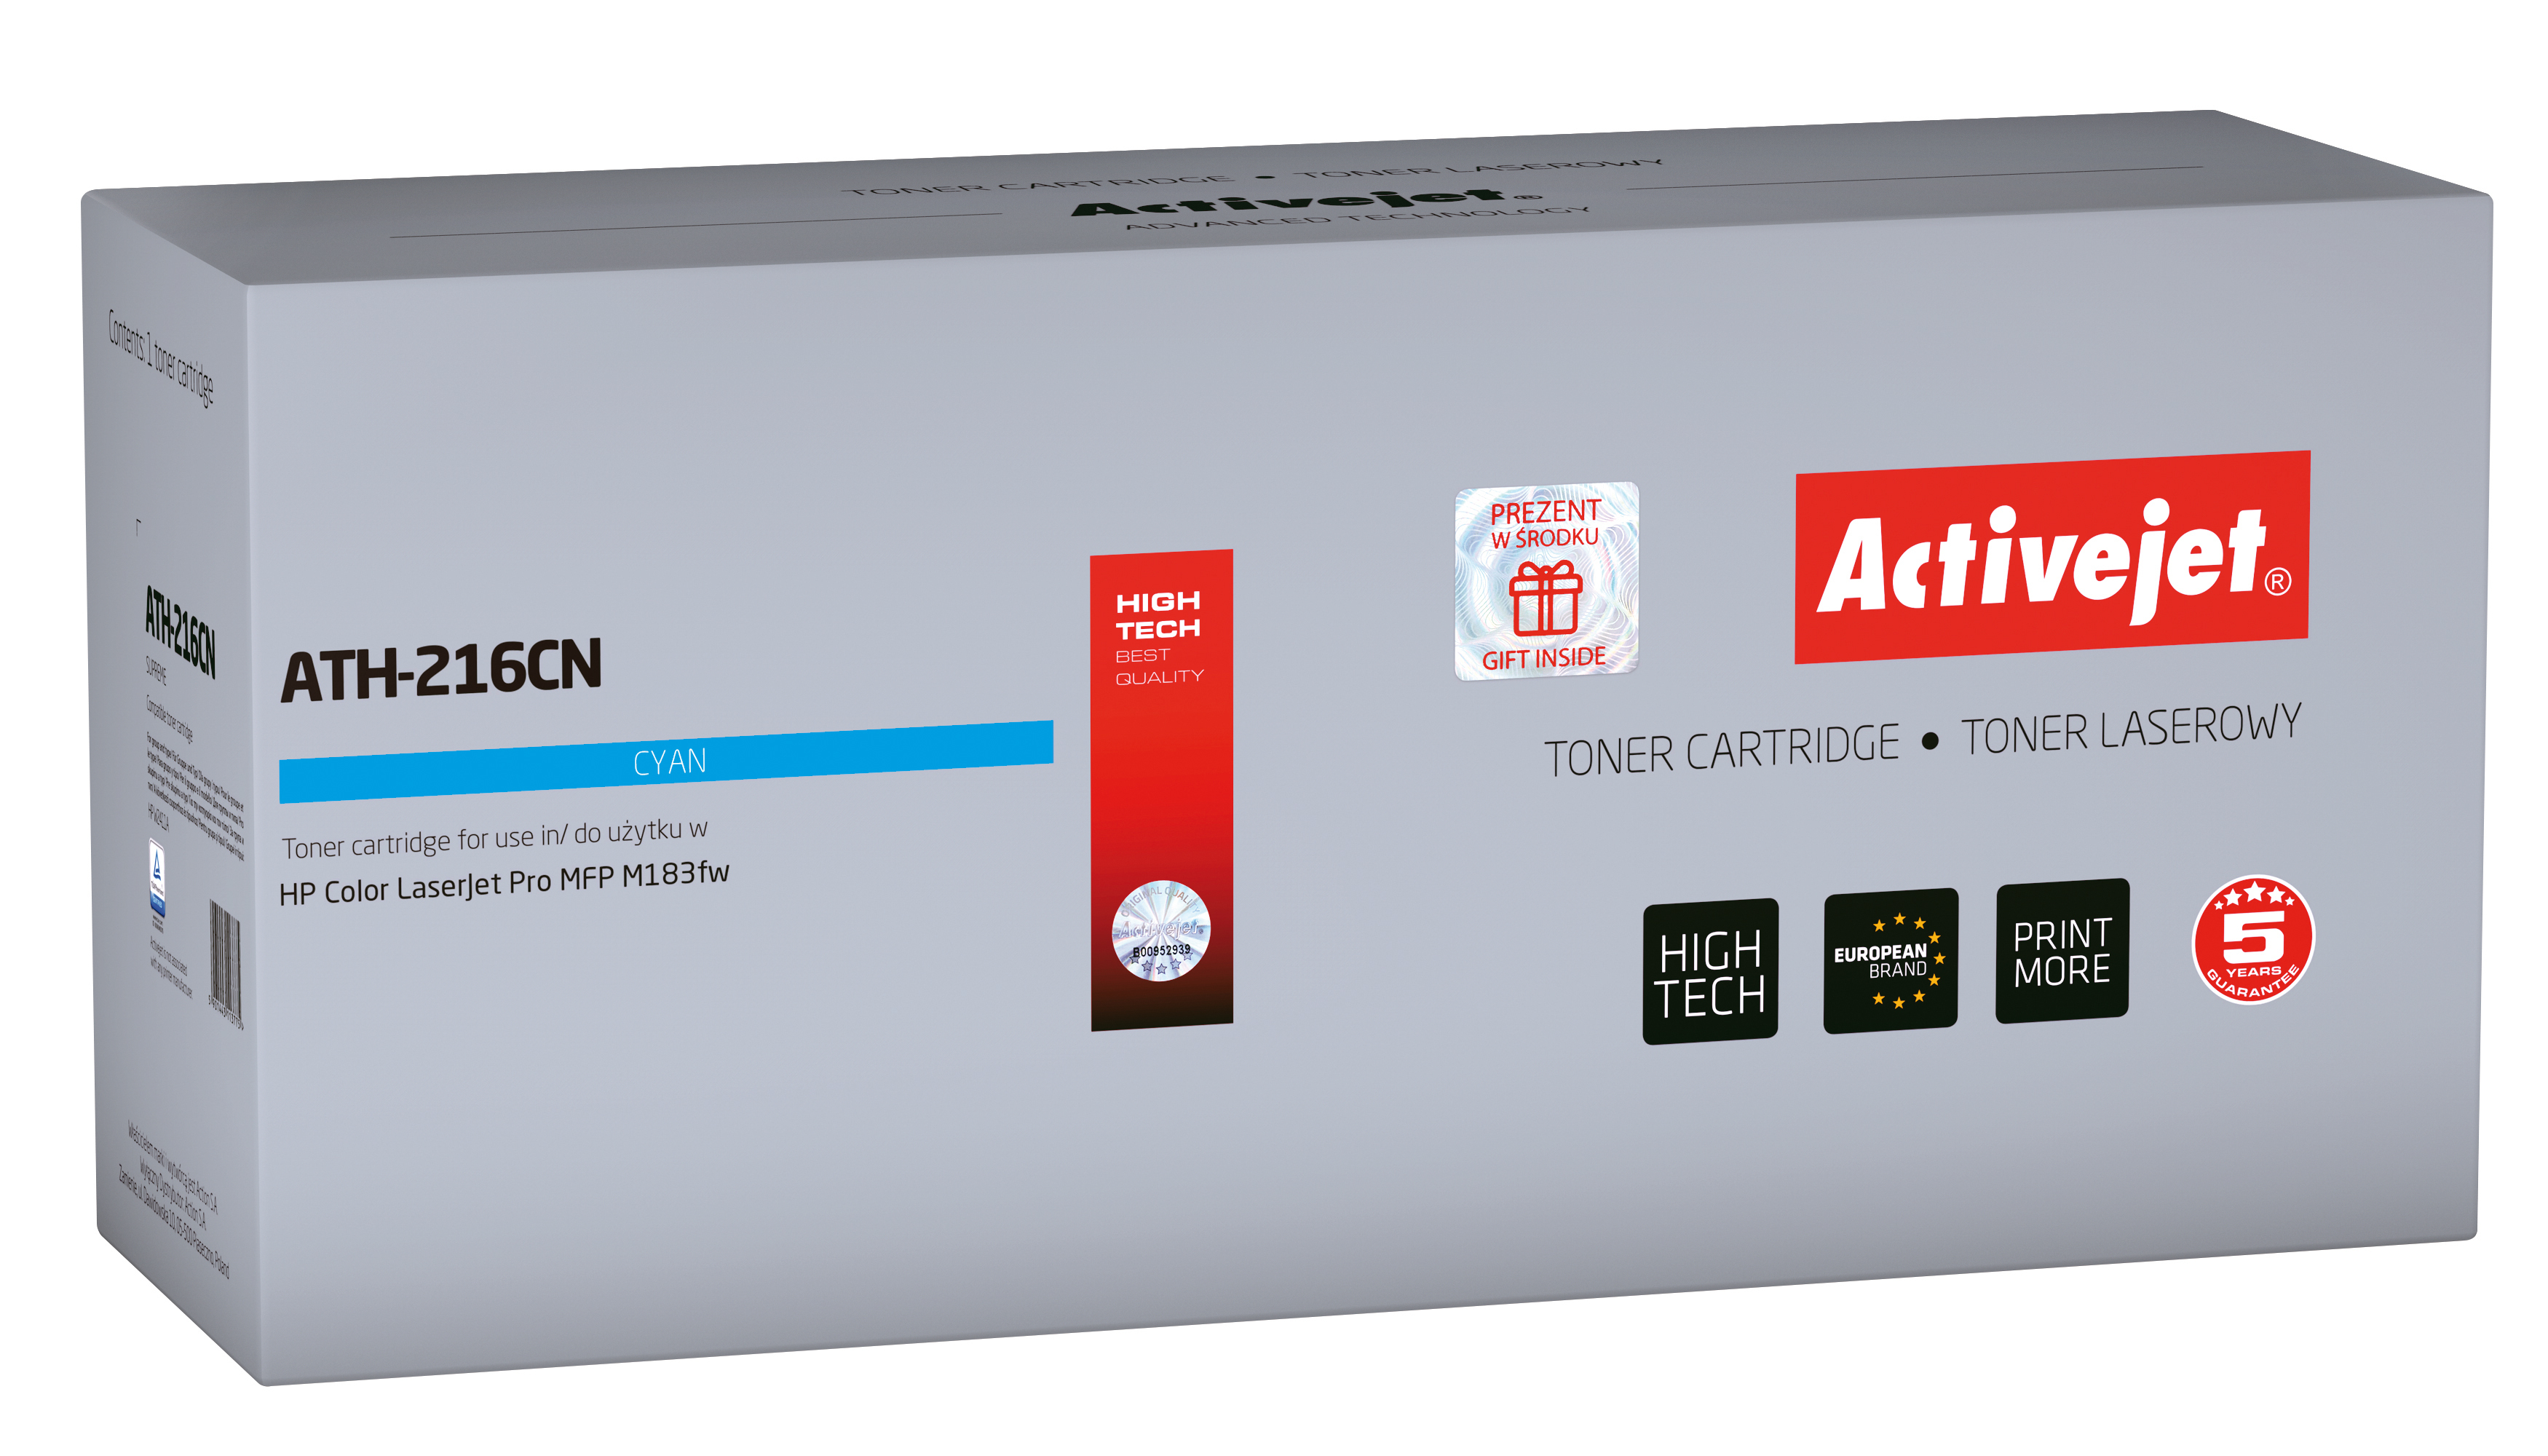 Toner Activejet ATH-216CN do drukarki HP, Zamiennik HP 216A W2411A; Supreme; 850 stron; Błękitny, z chipem